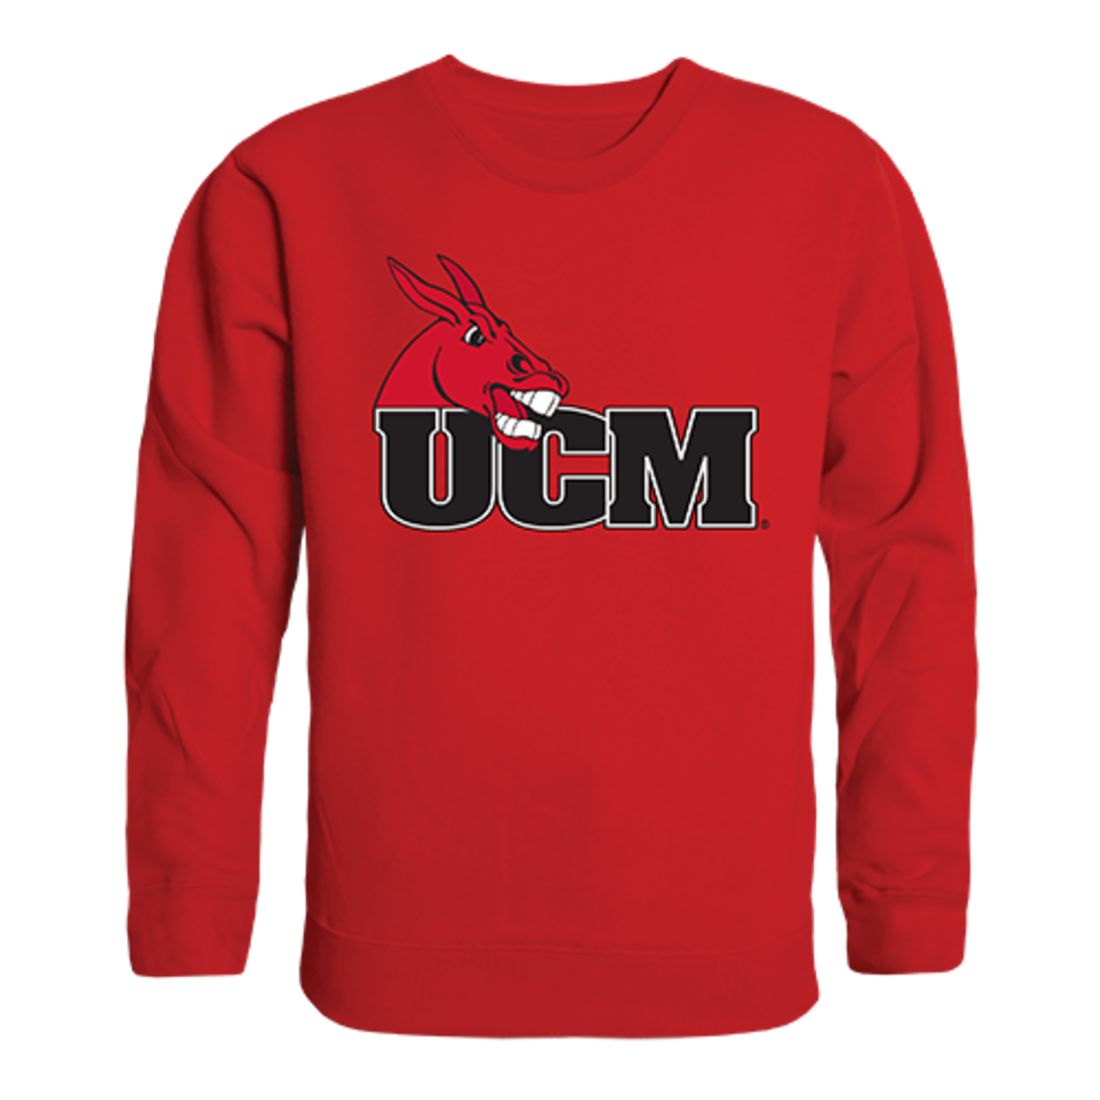 California State University Stanislaus Warriors Crewneck Pullover Sweatshirt Sweater Red-Campus-Wardrobe